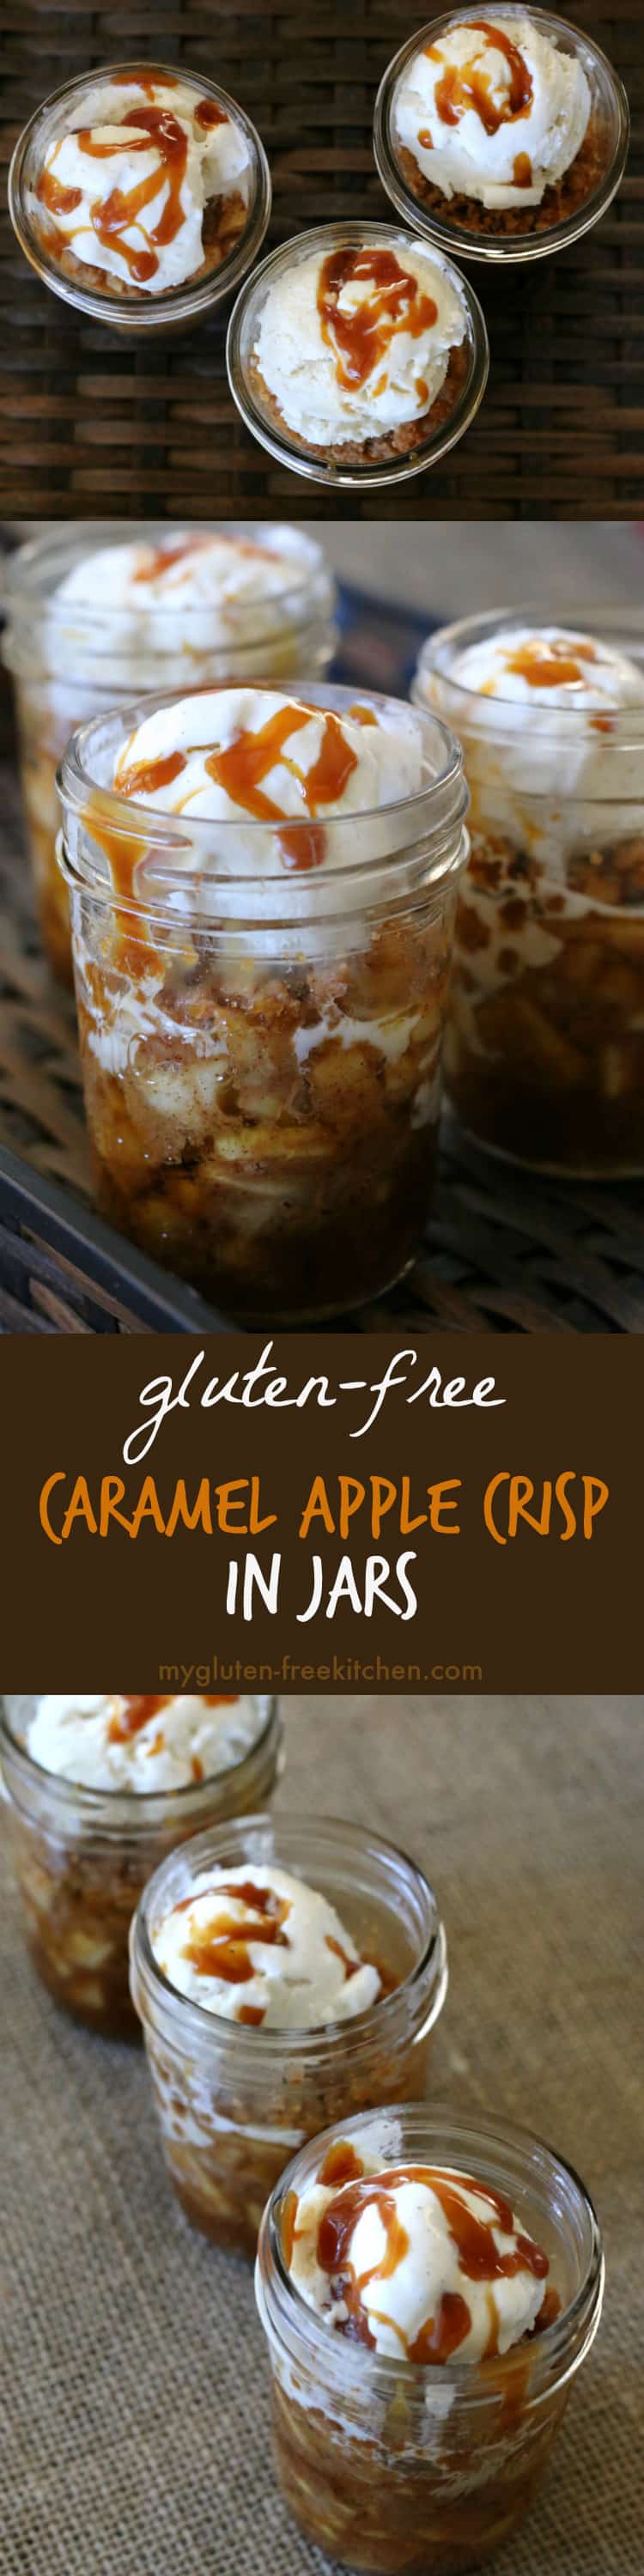 Gluten-free Caramel Apple Crisp in Jars recipe